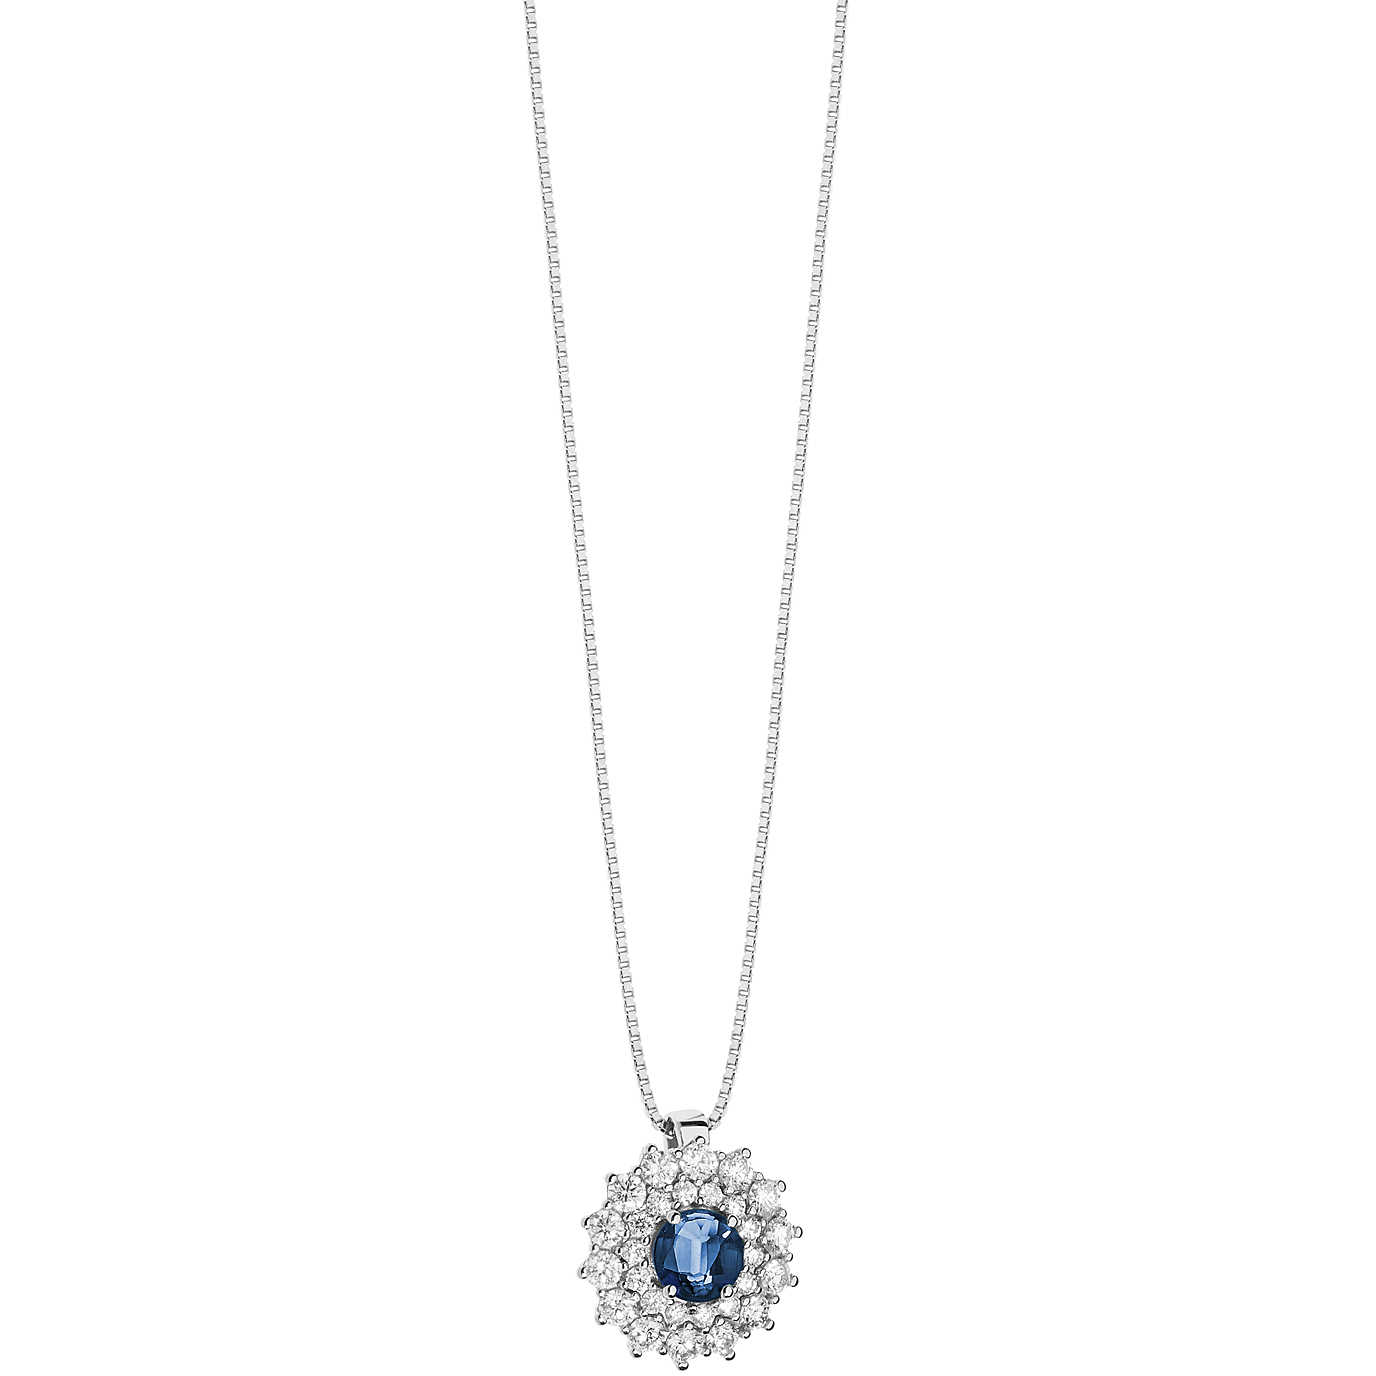 Orion GLB 1477 Women’s Jewelry Necklace